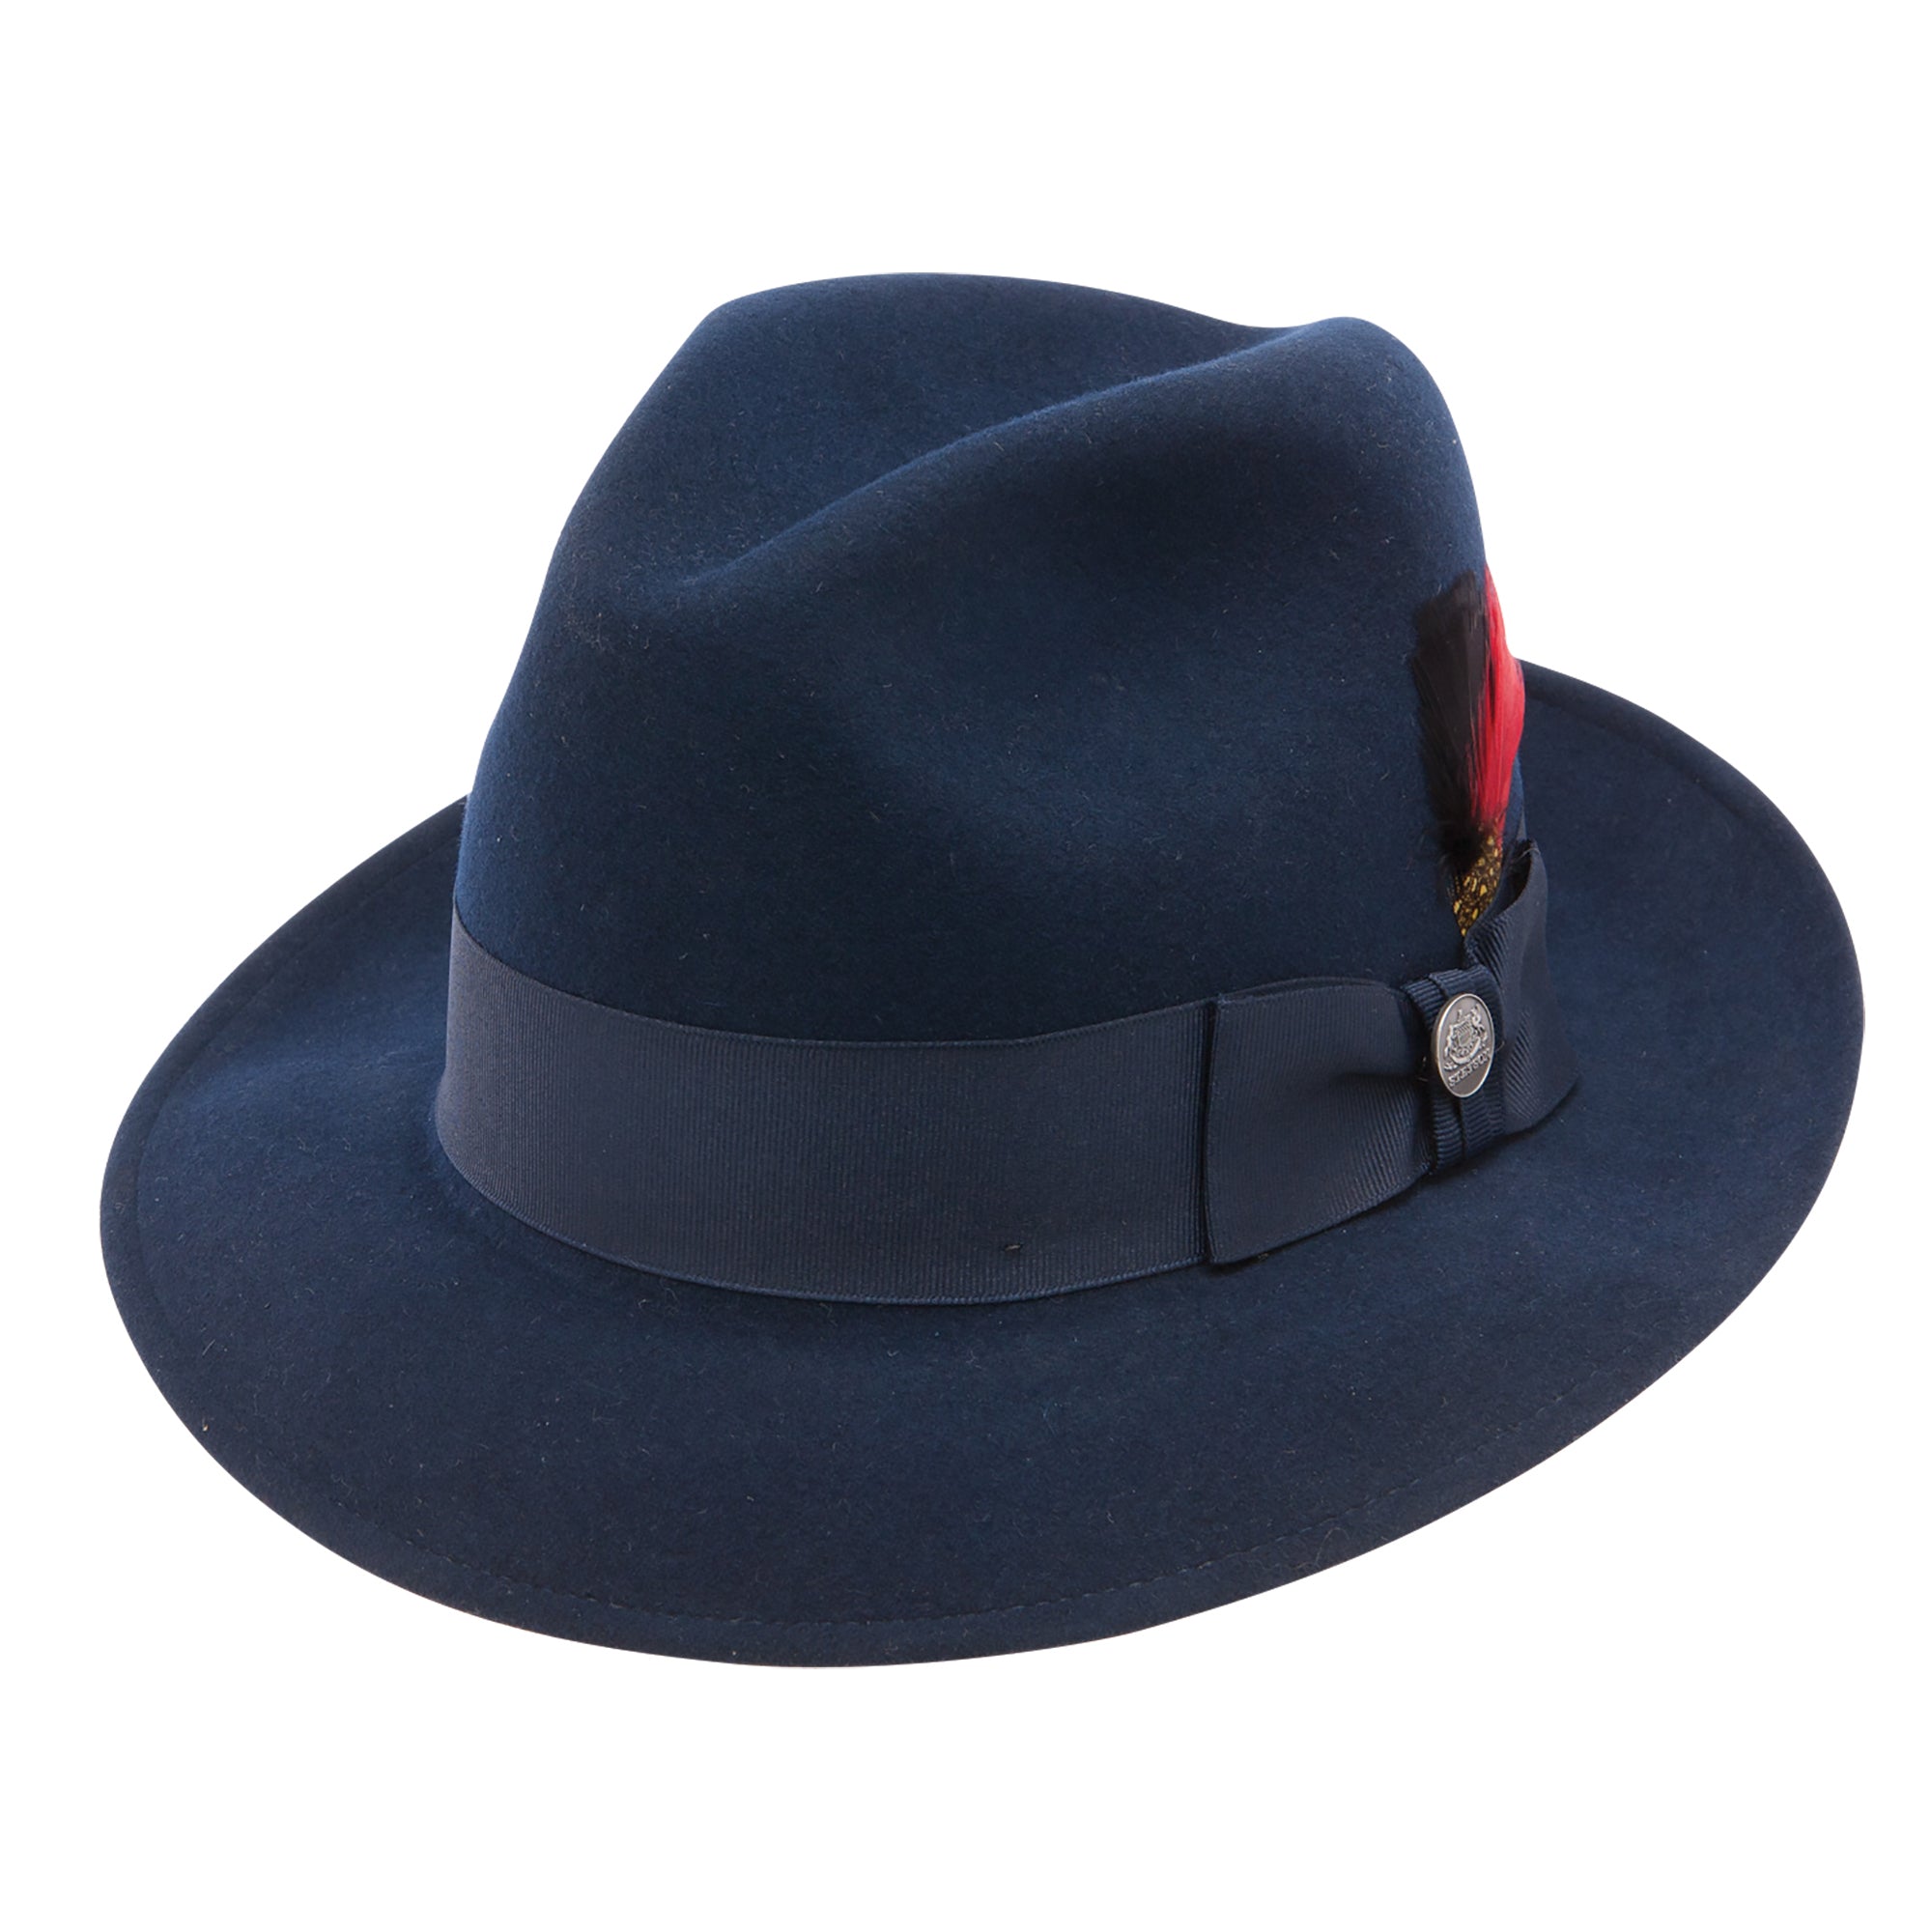 Stetson 100% Pure Wool Felt Frederick Hats in Navy